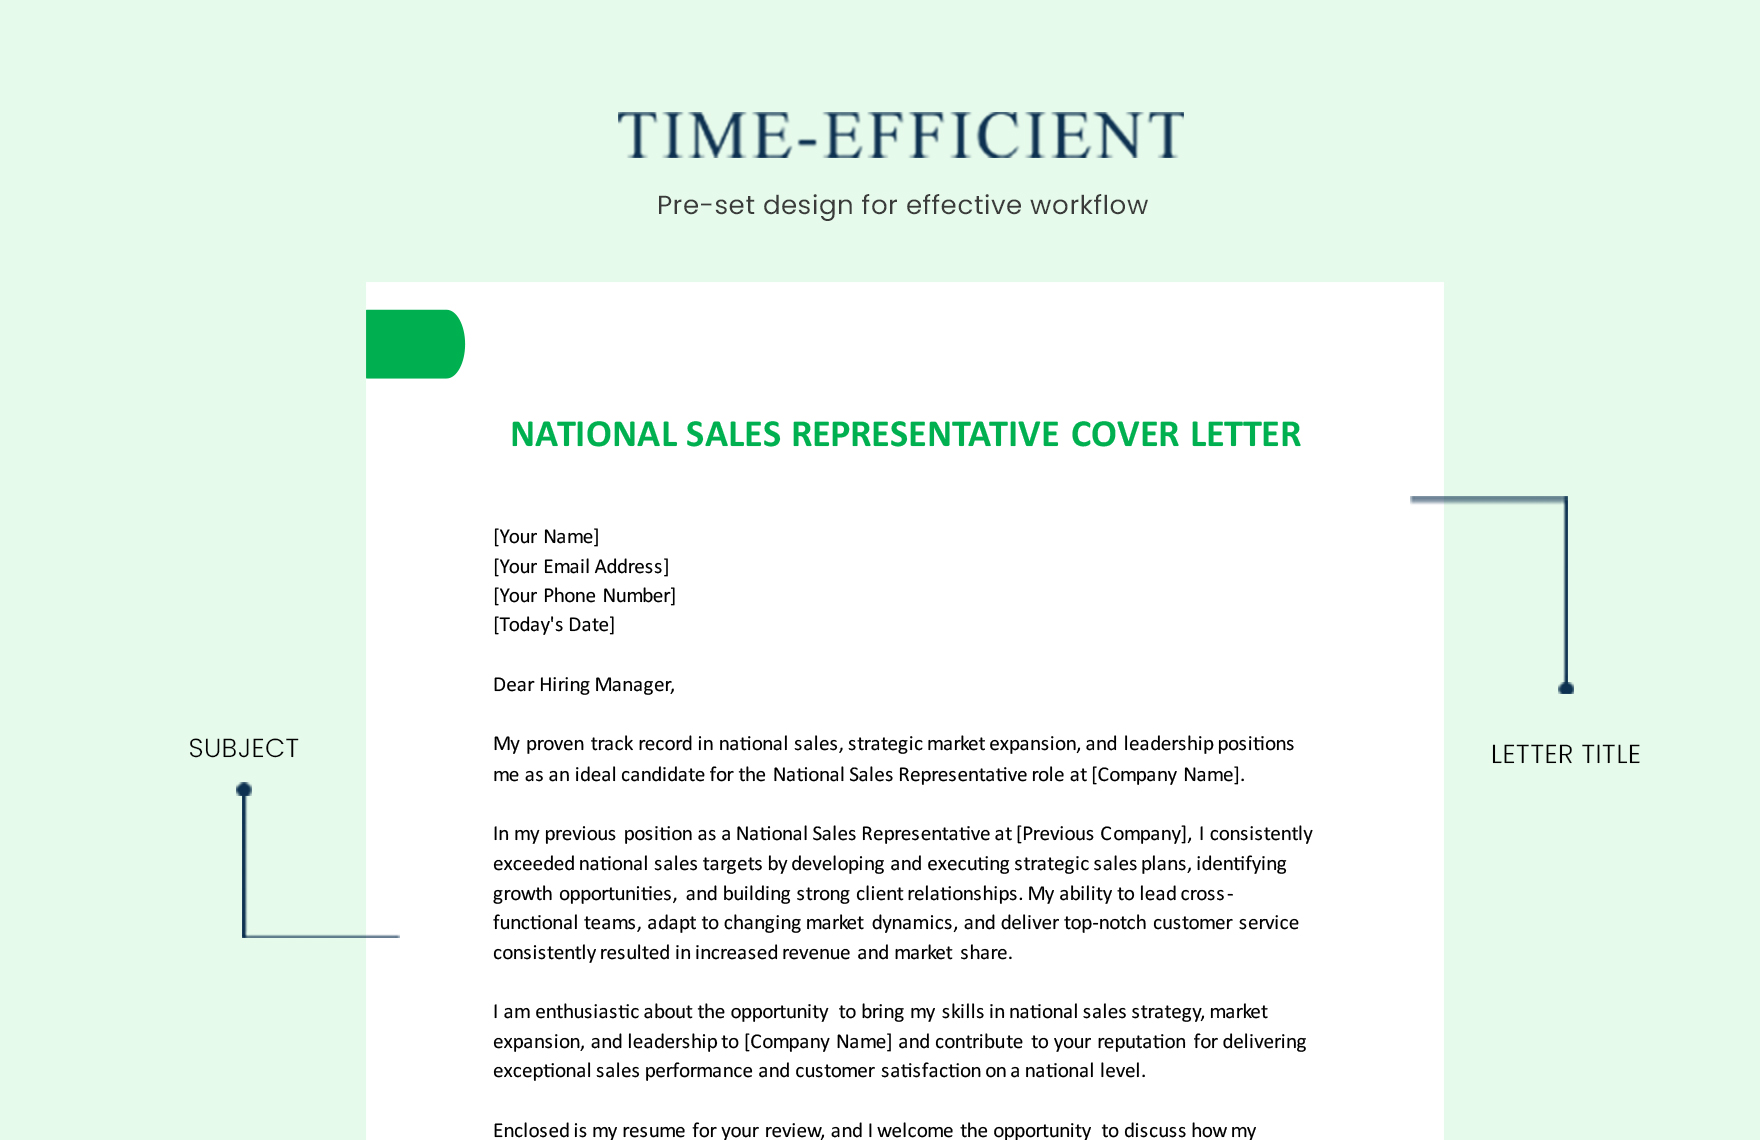 National Sales Representative Cover Letter